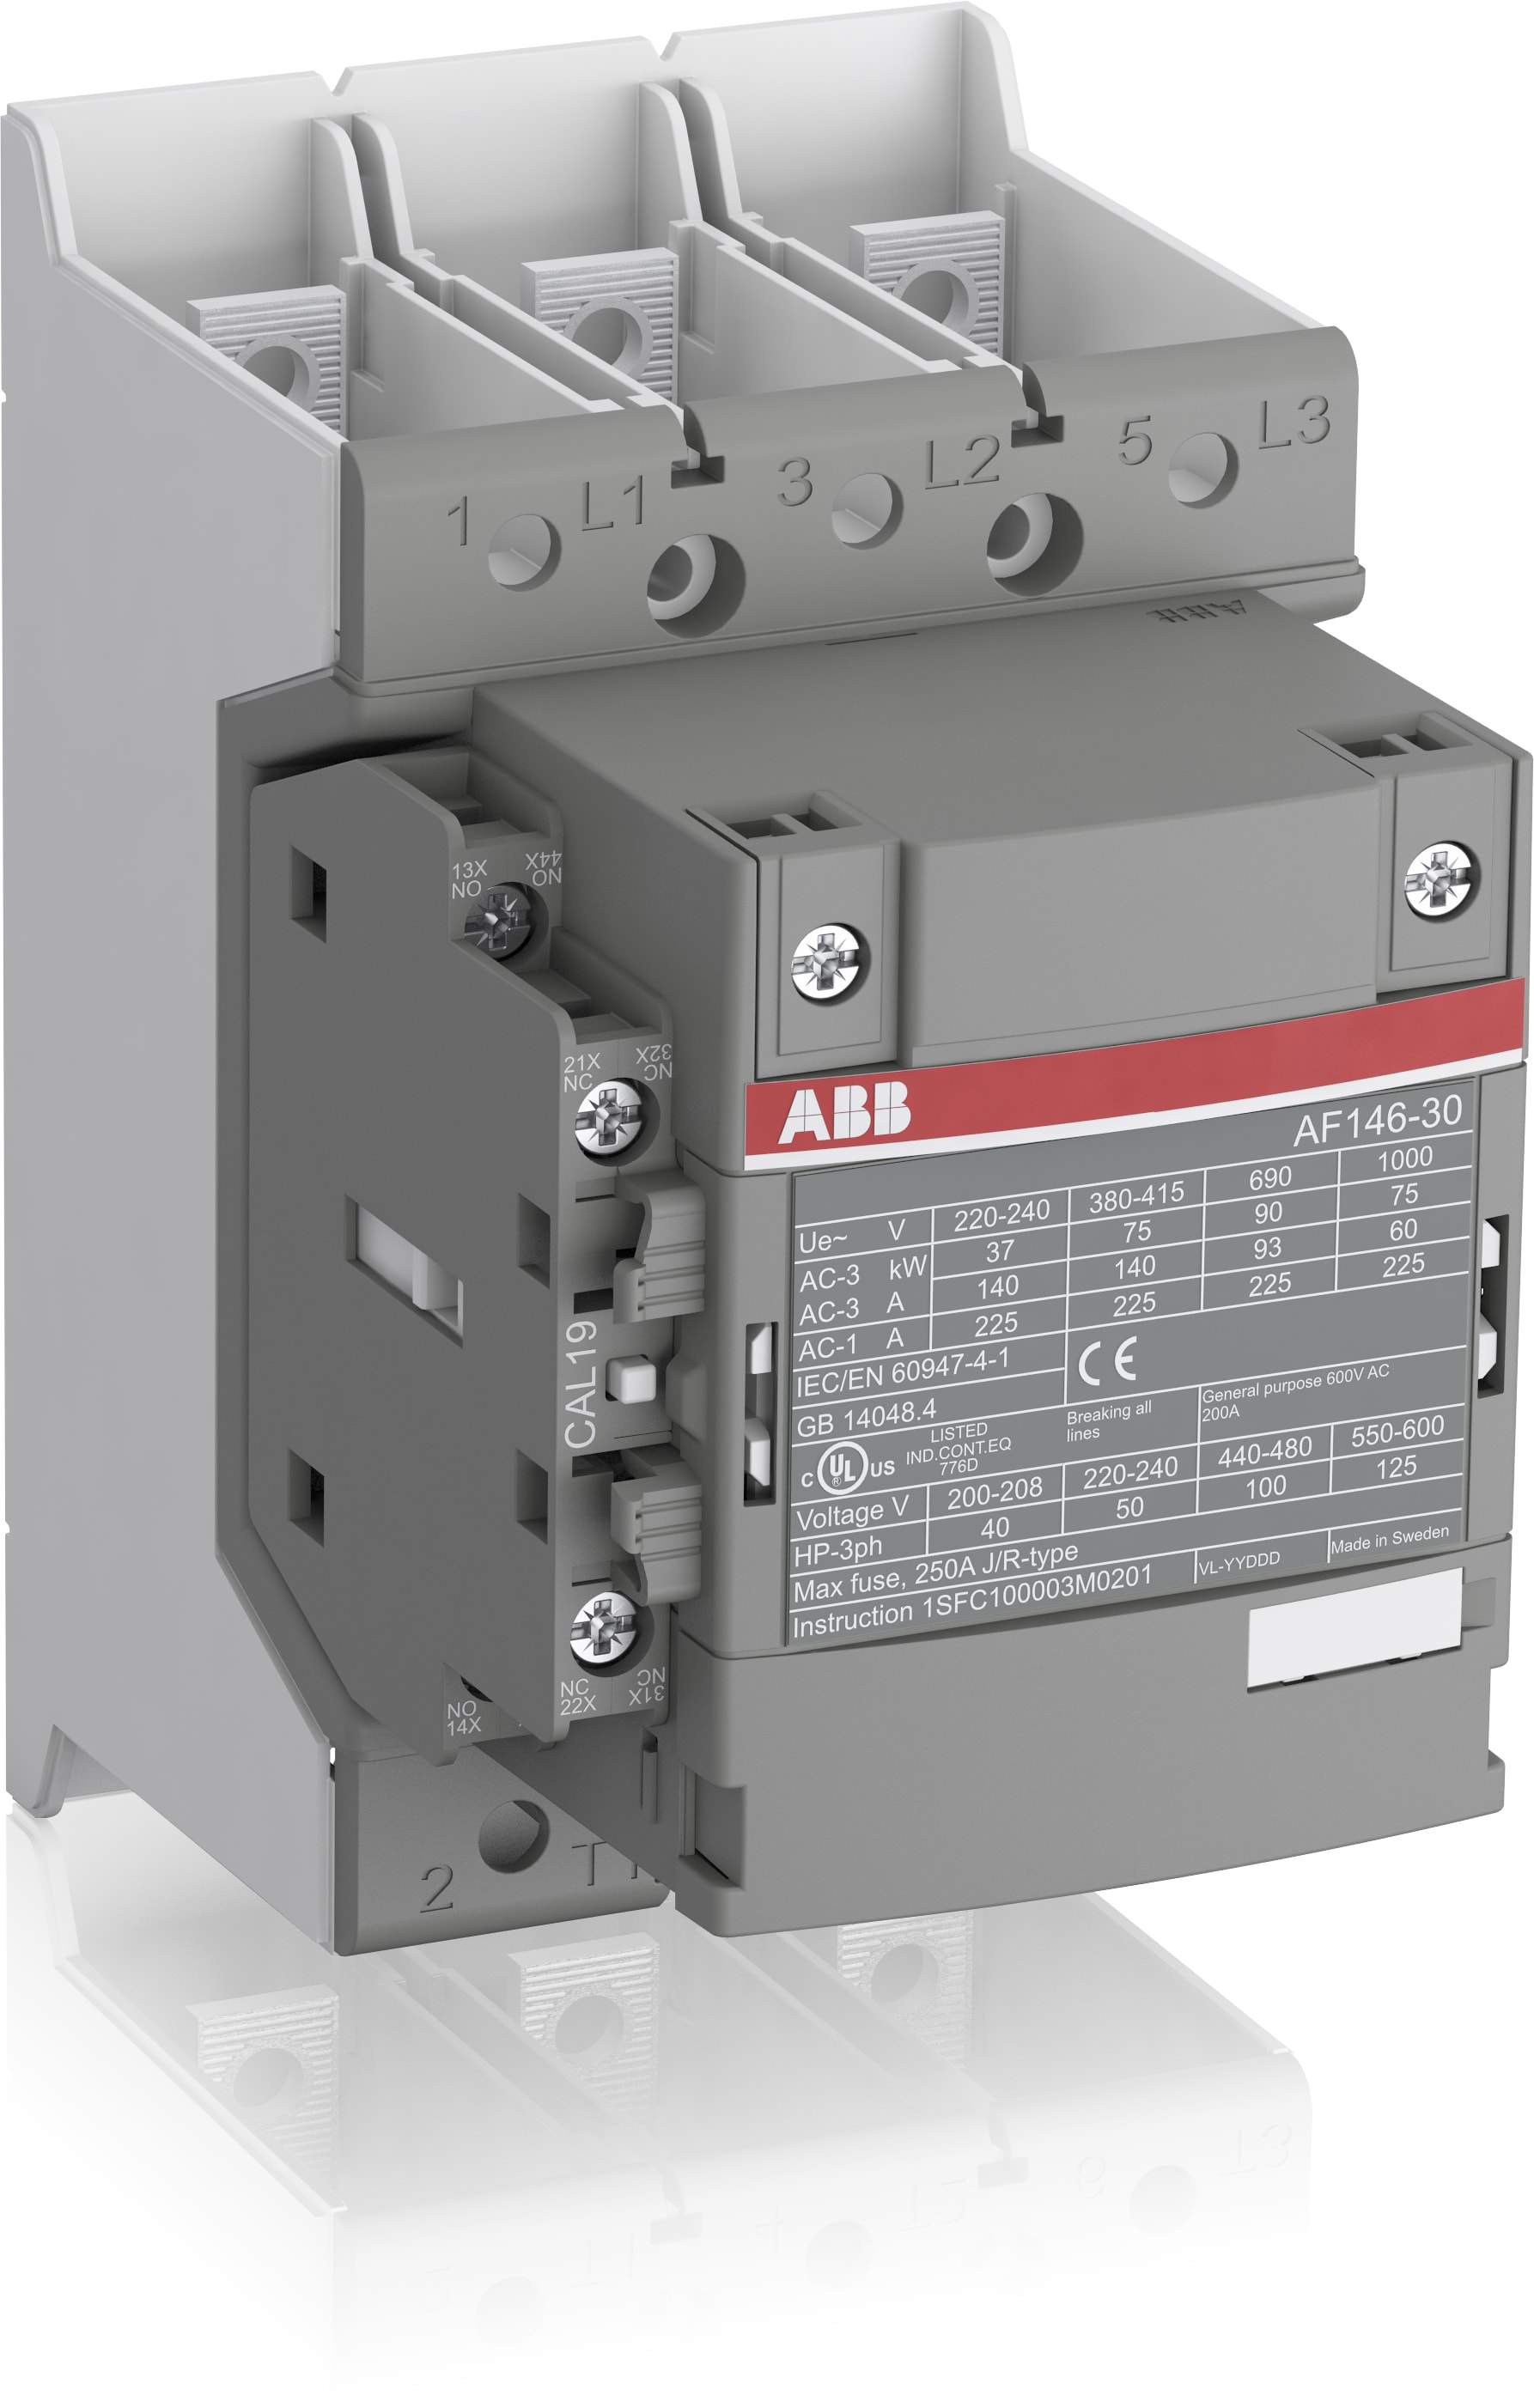 ABB Electrification - AF146-30-11-12B 48-130V 50/60Hz/DC - Kontaktor med skinnetilkobling. Med 1NO+1NC hjelpekontakt.